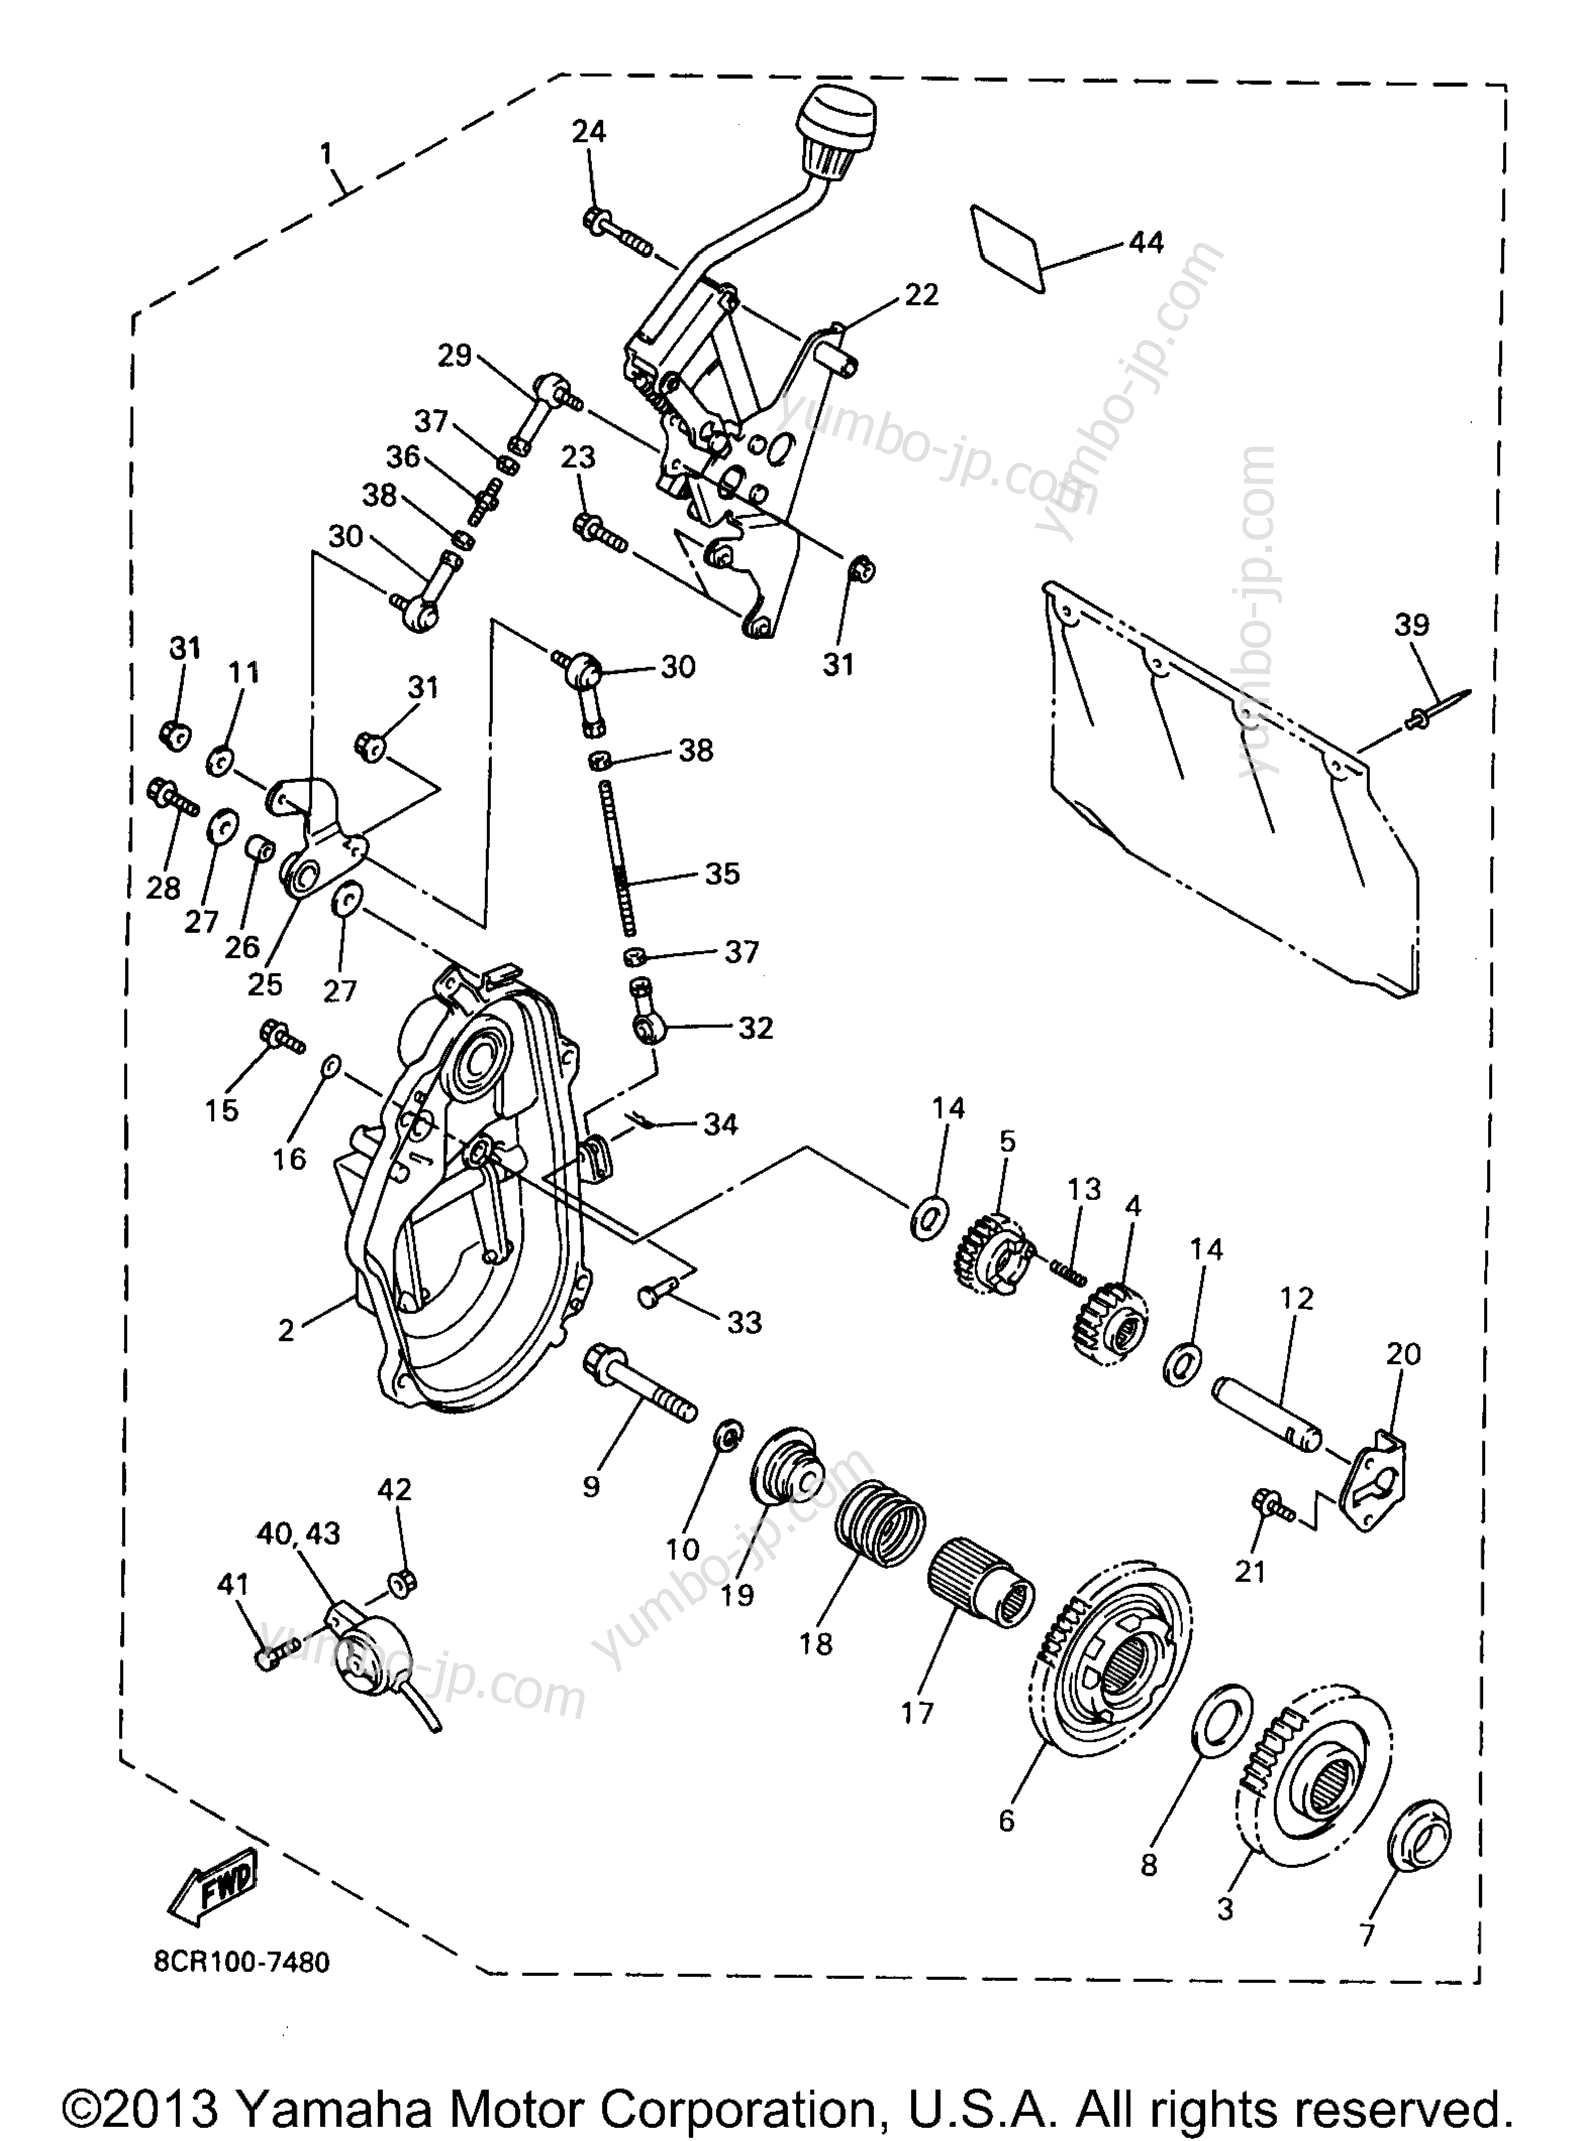 Alternate Reverse Gear Kit for snowmobiles YAMAHA VMAX 600 XTC (VX600XTCA) 1997 year